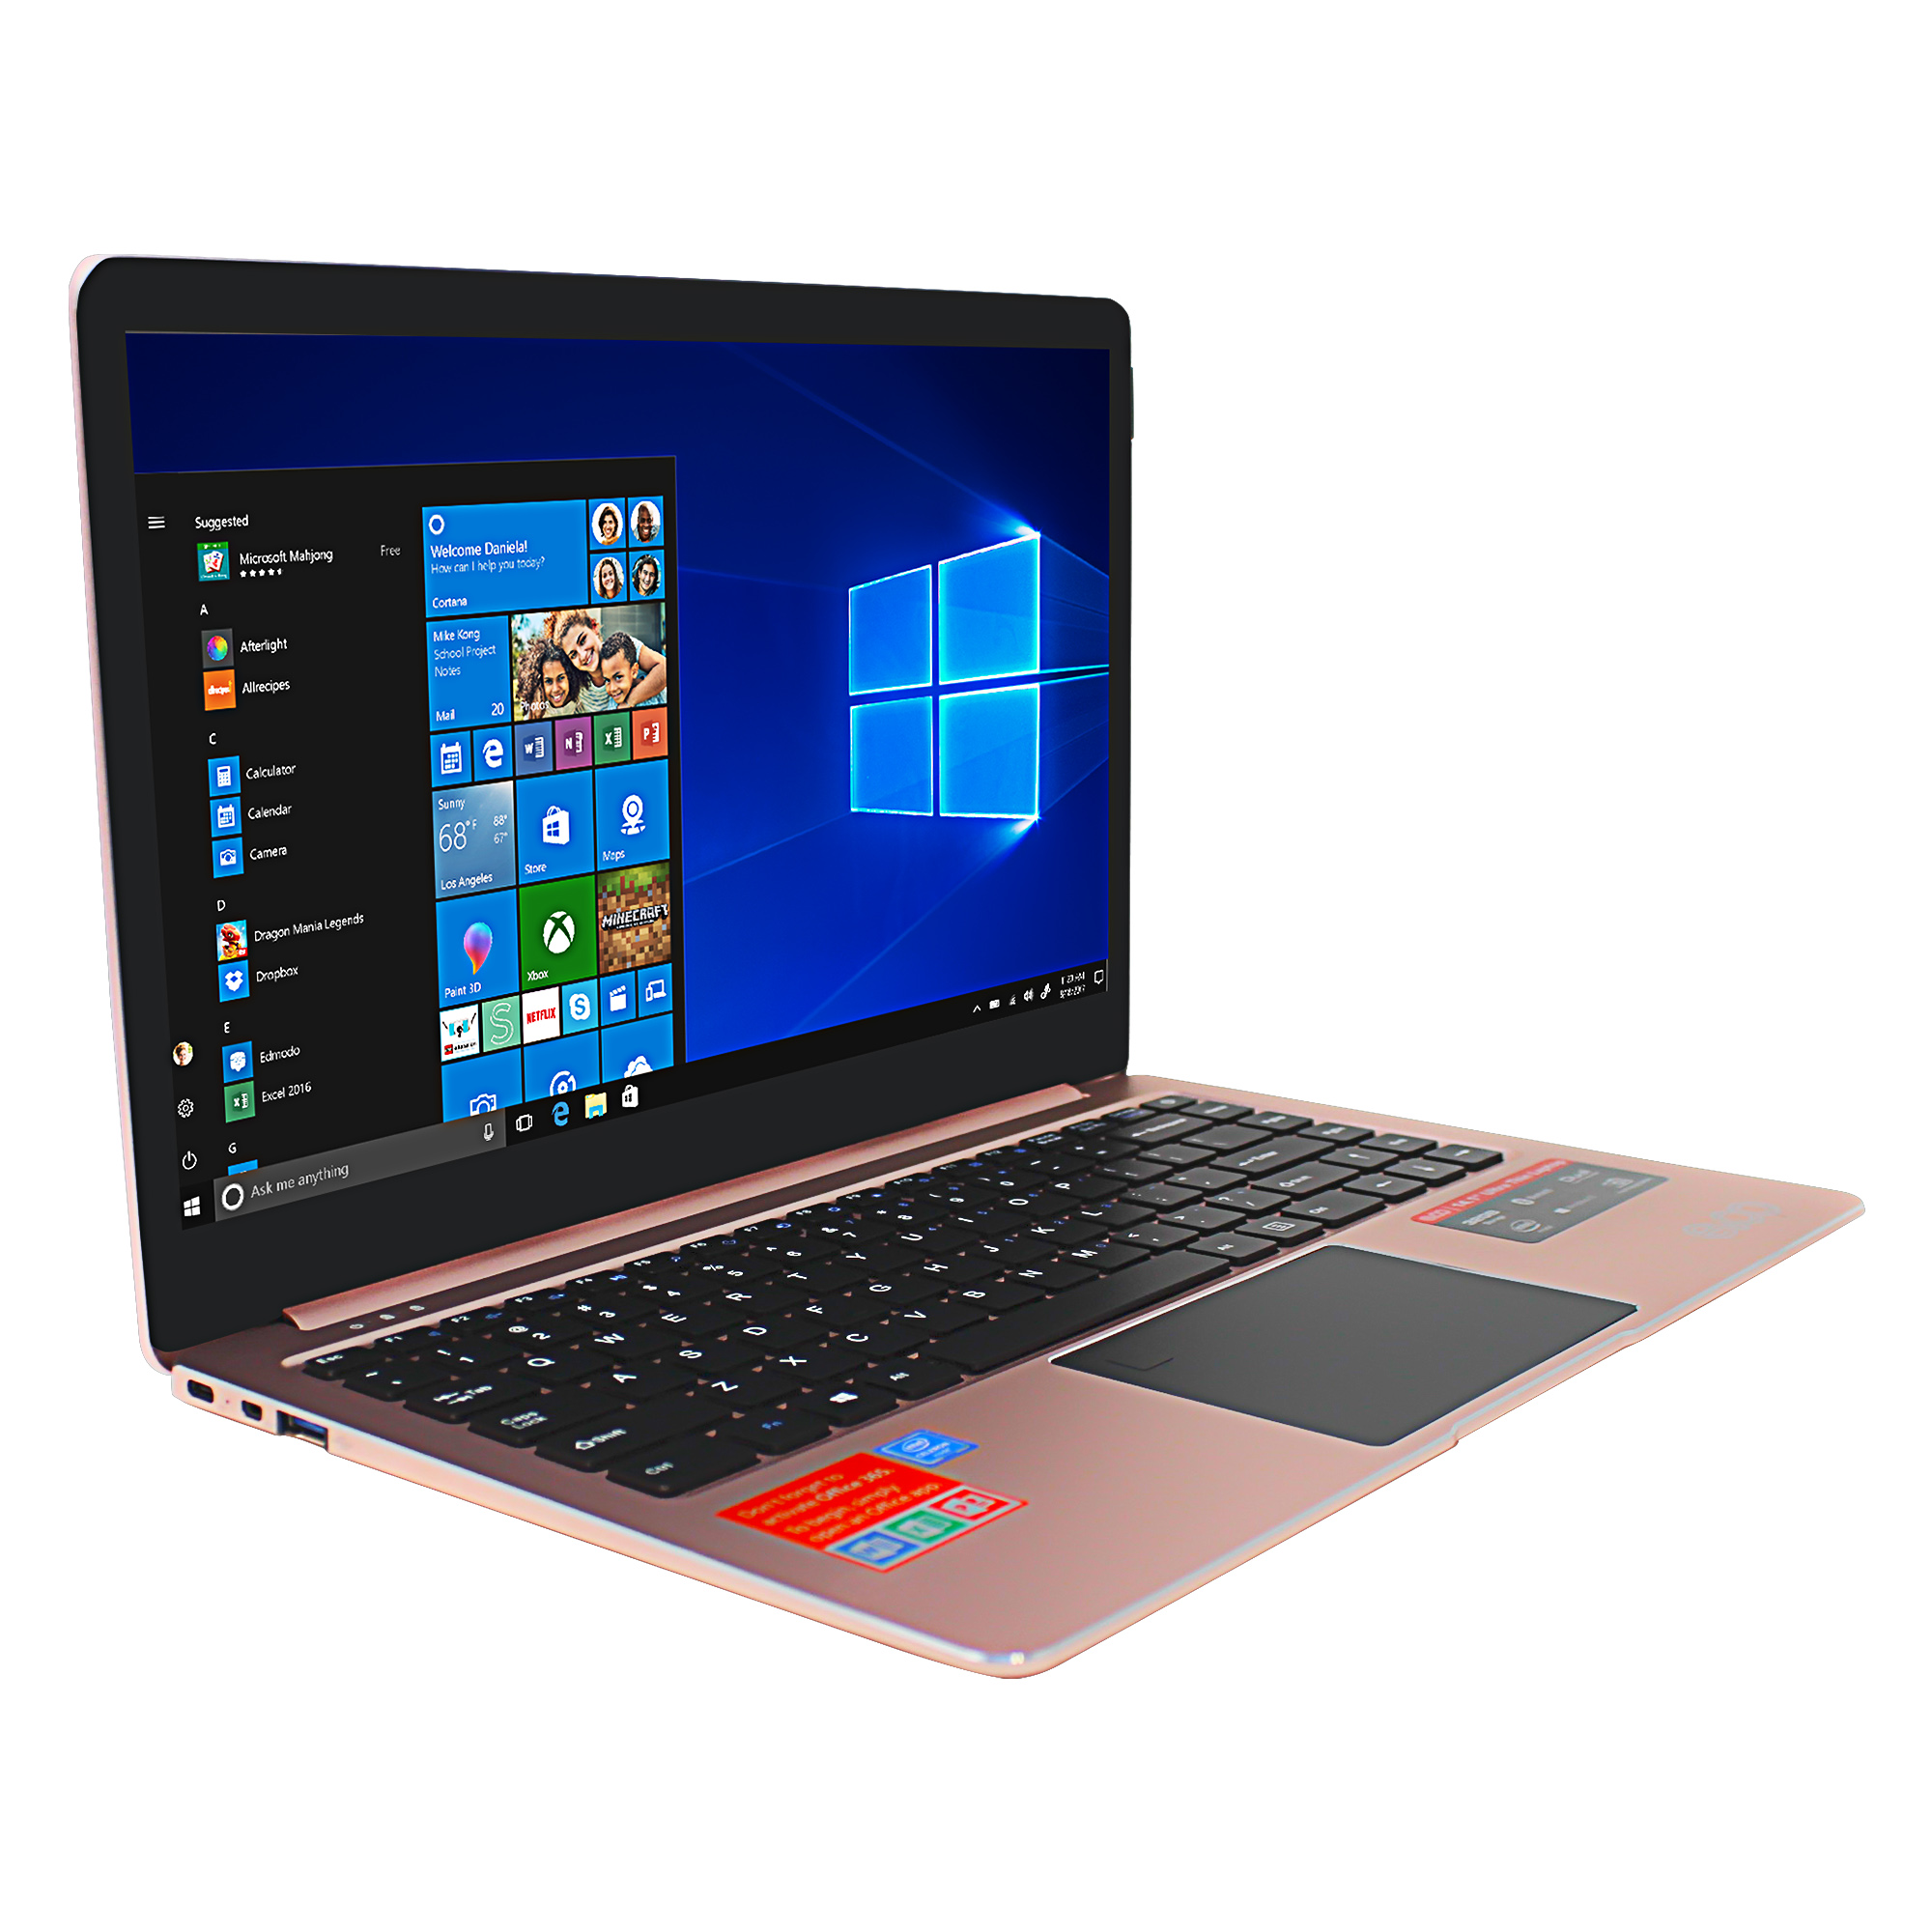 EVOO 14.1" Ultra Thin Laptop - Elite Series, Intel Celeron CPU, 4GB Memory, 32GB, Windows 10 S, Windows Hello (Fingerprint Scanner), Rose Gold - image 5 of 5